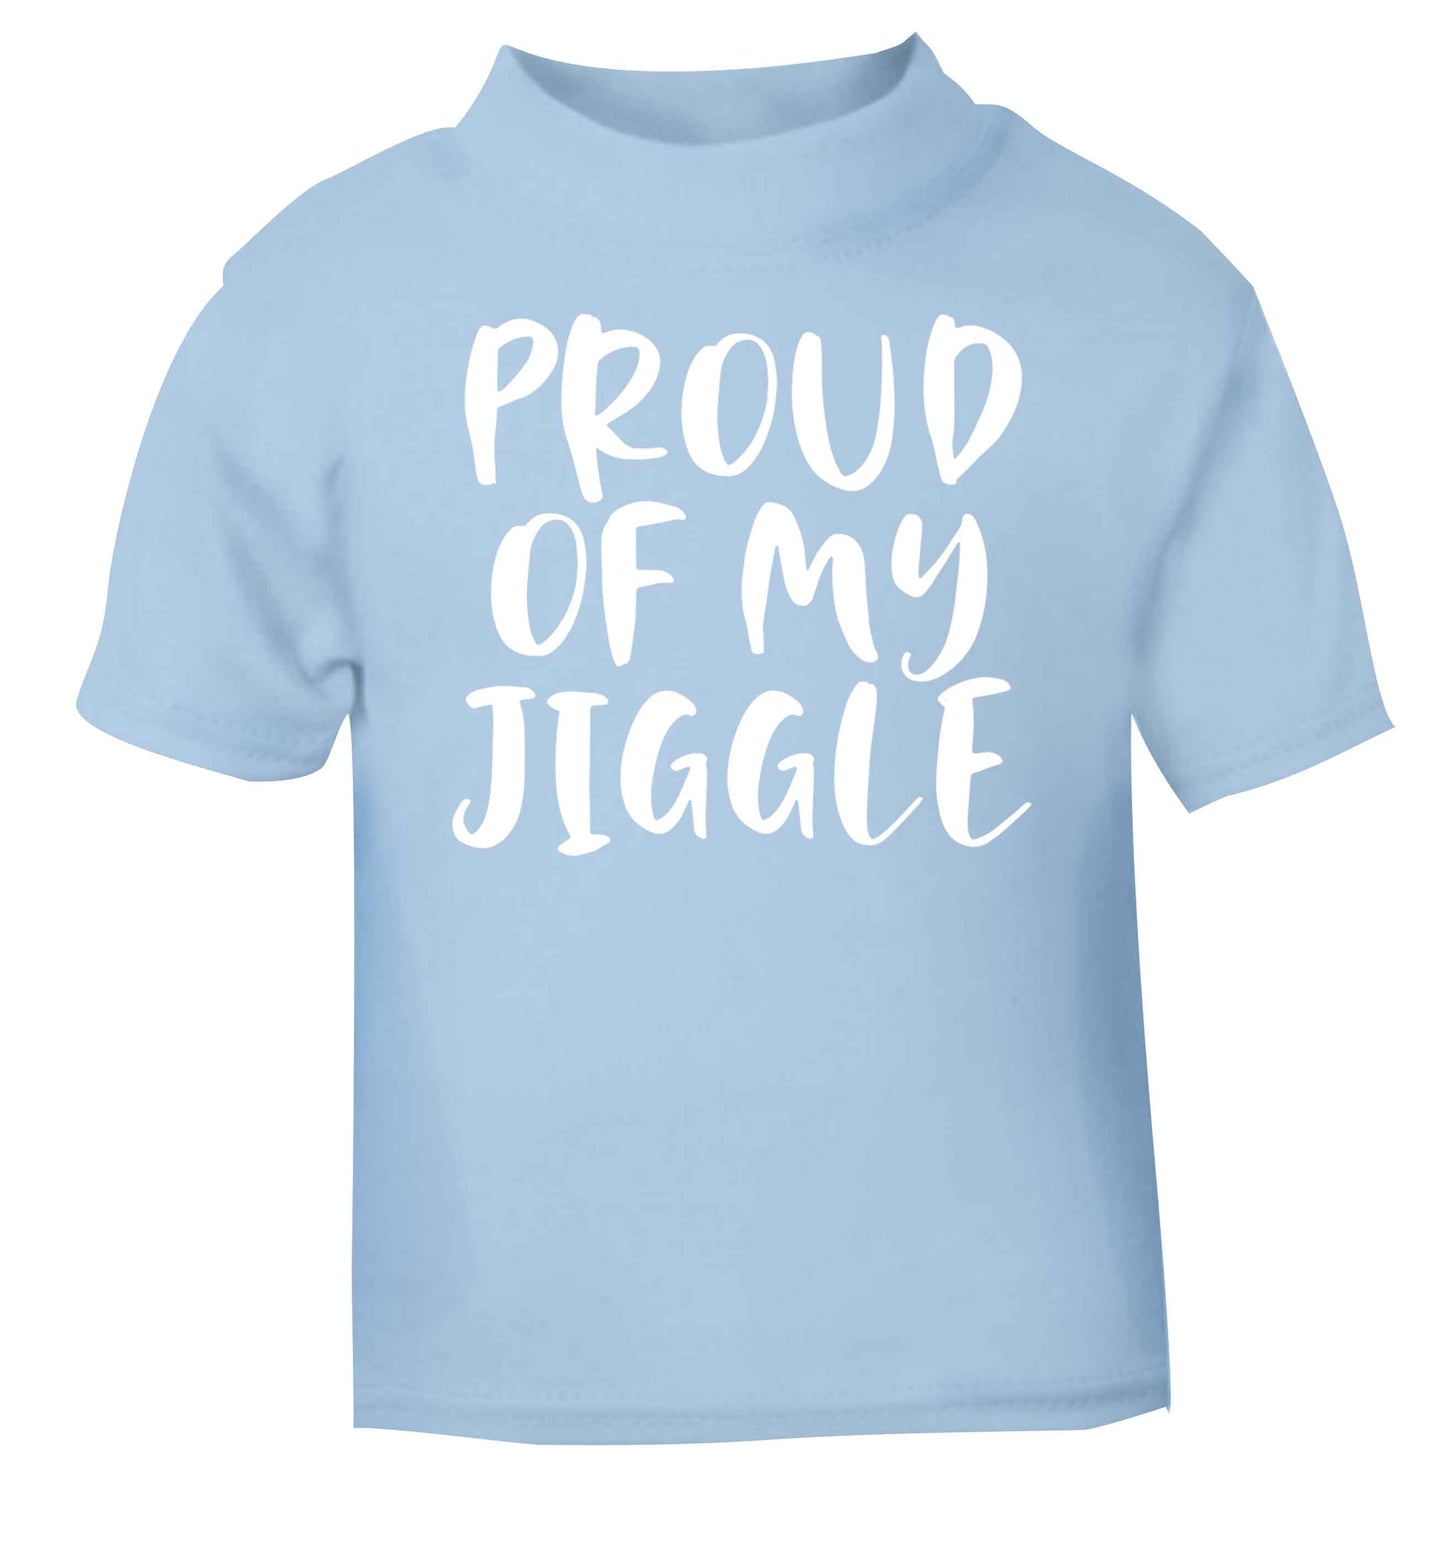 Proud of my jiggle light blue baby toddler Tshirt 2 Years